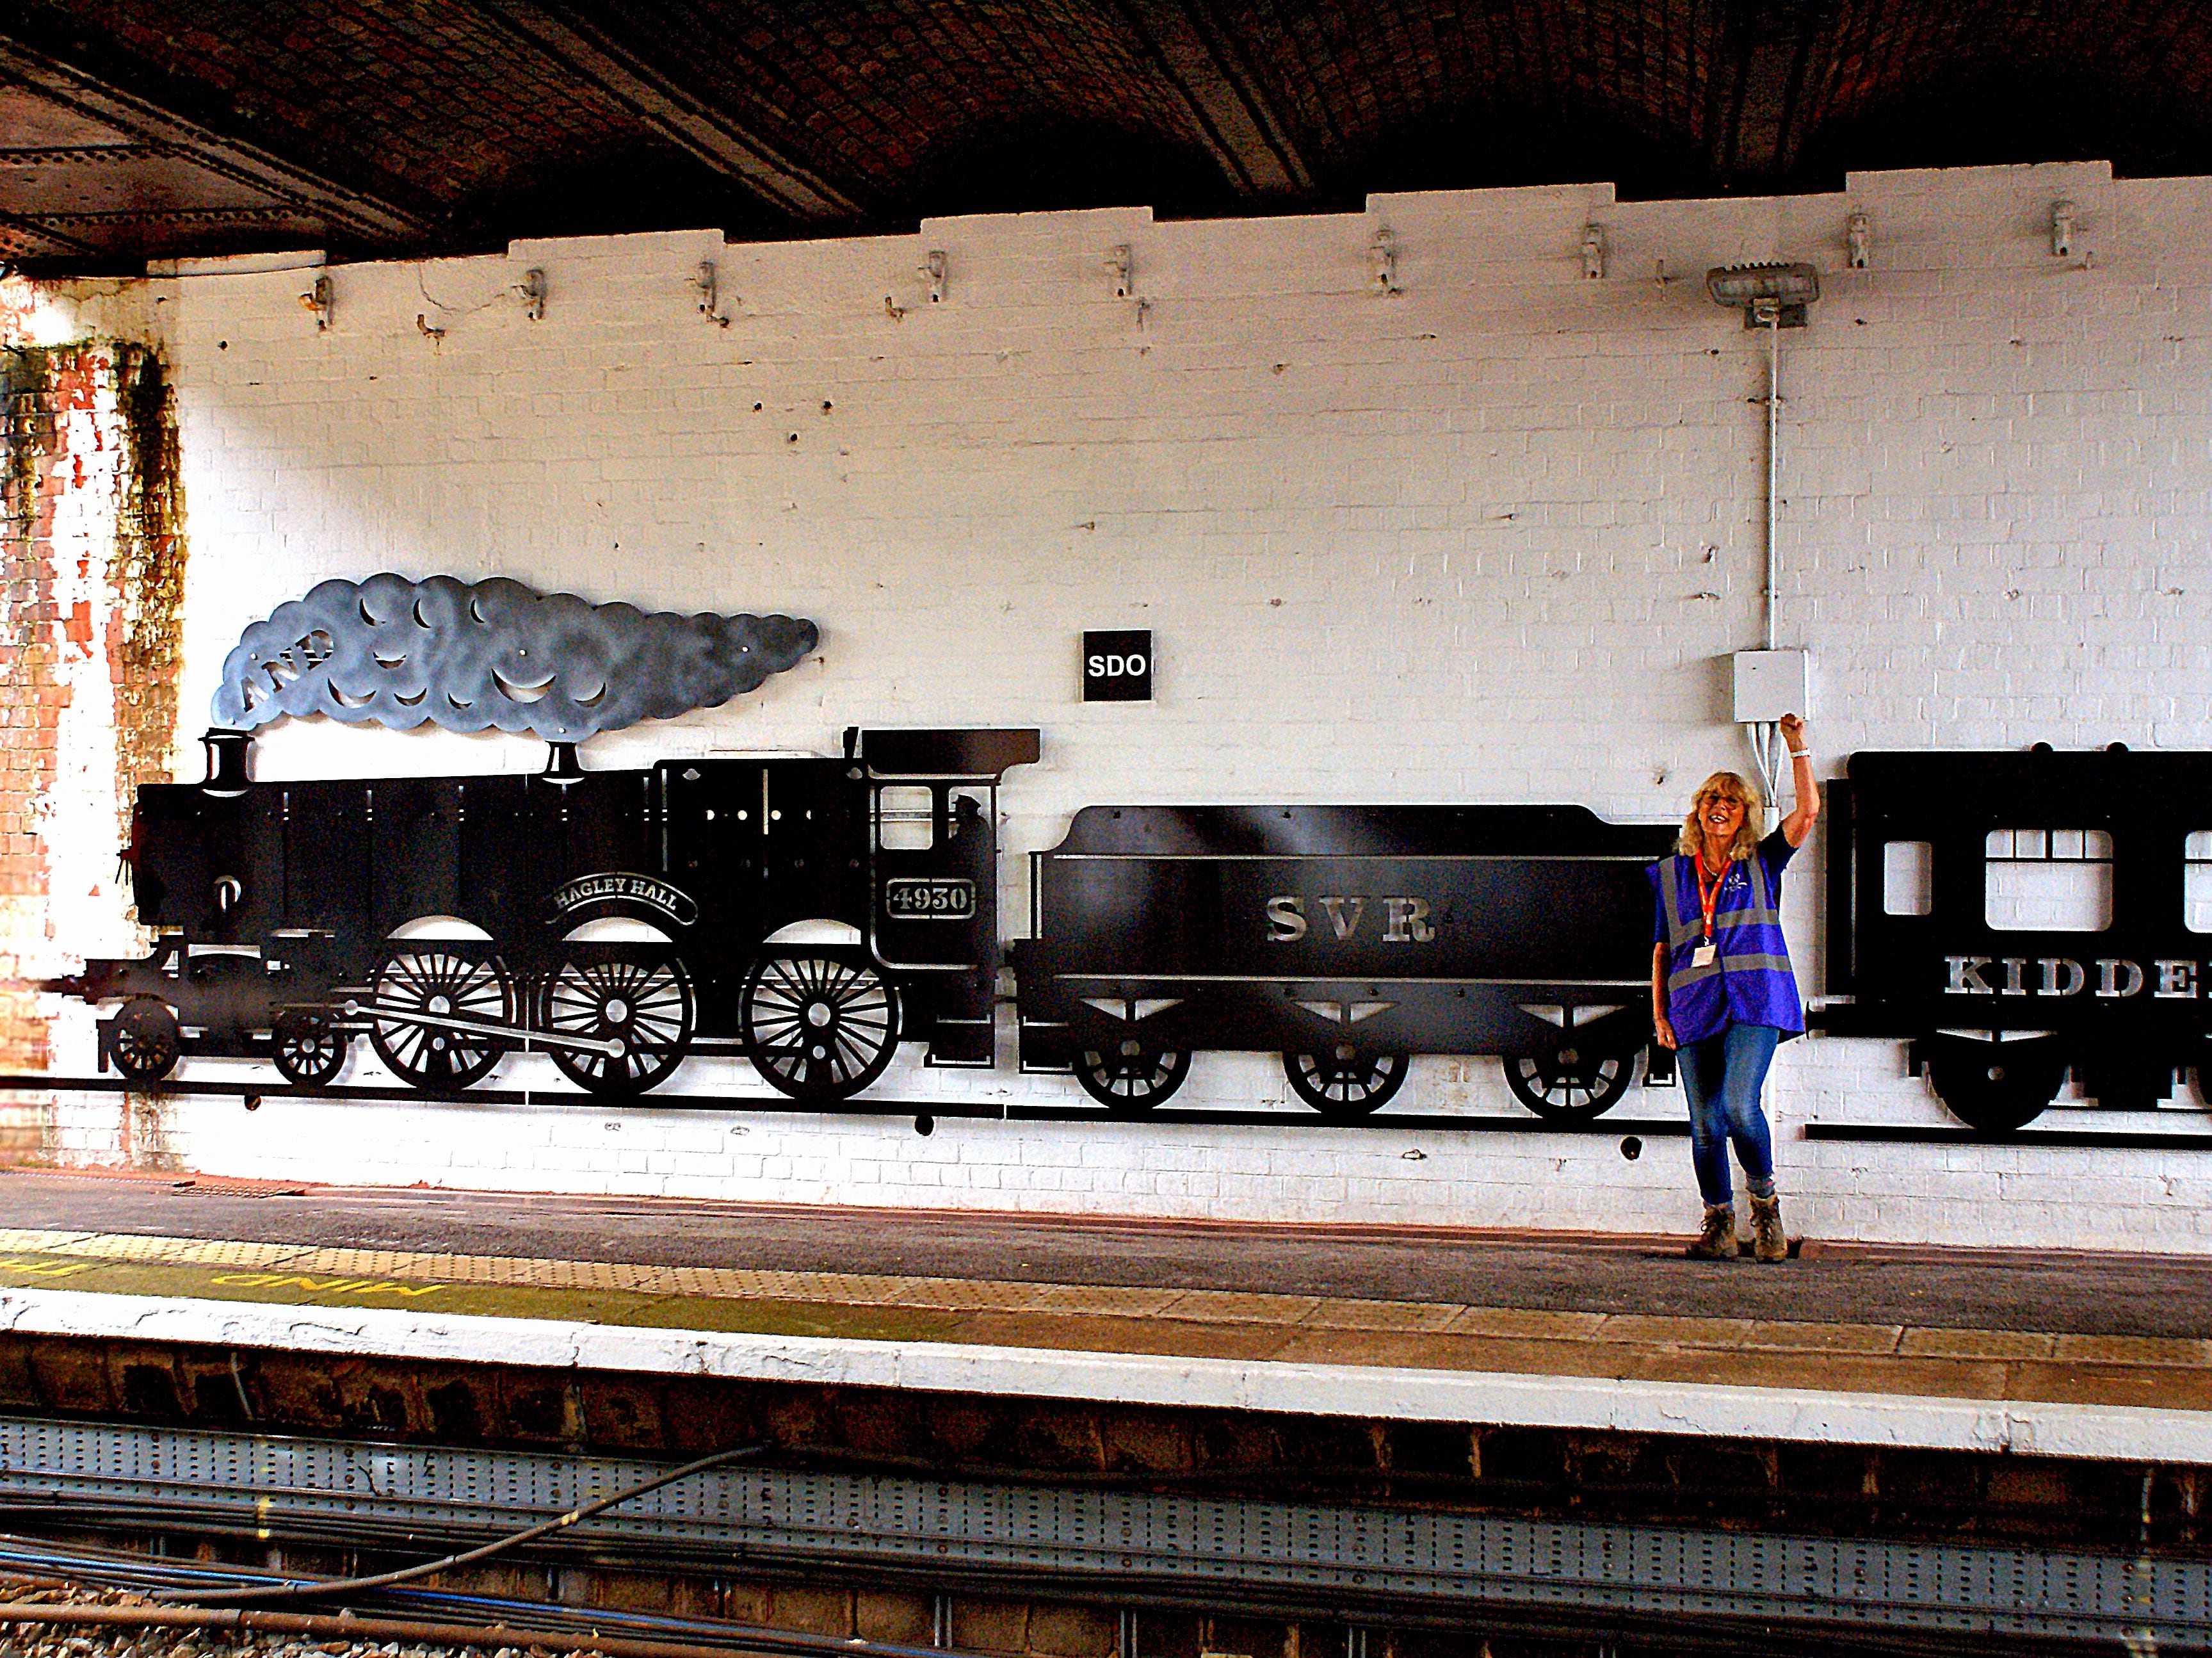 ‘Stunning’ heritage rail artwork at Kidderminster station